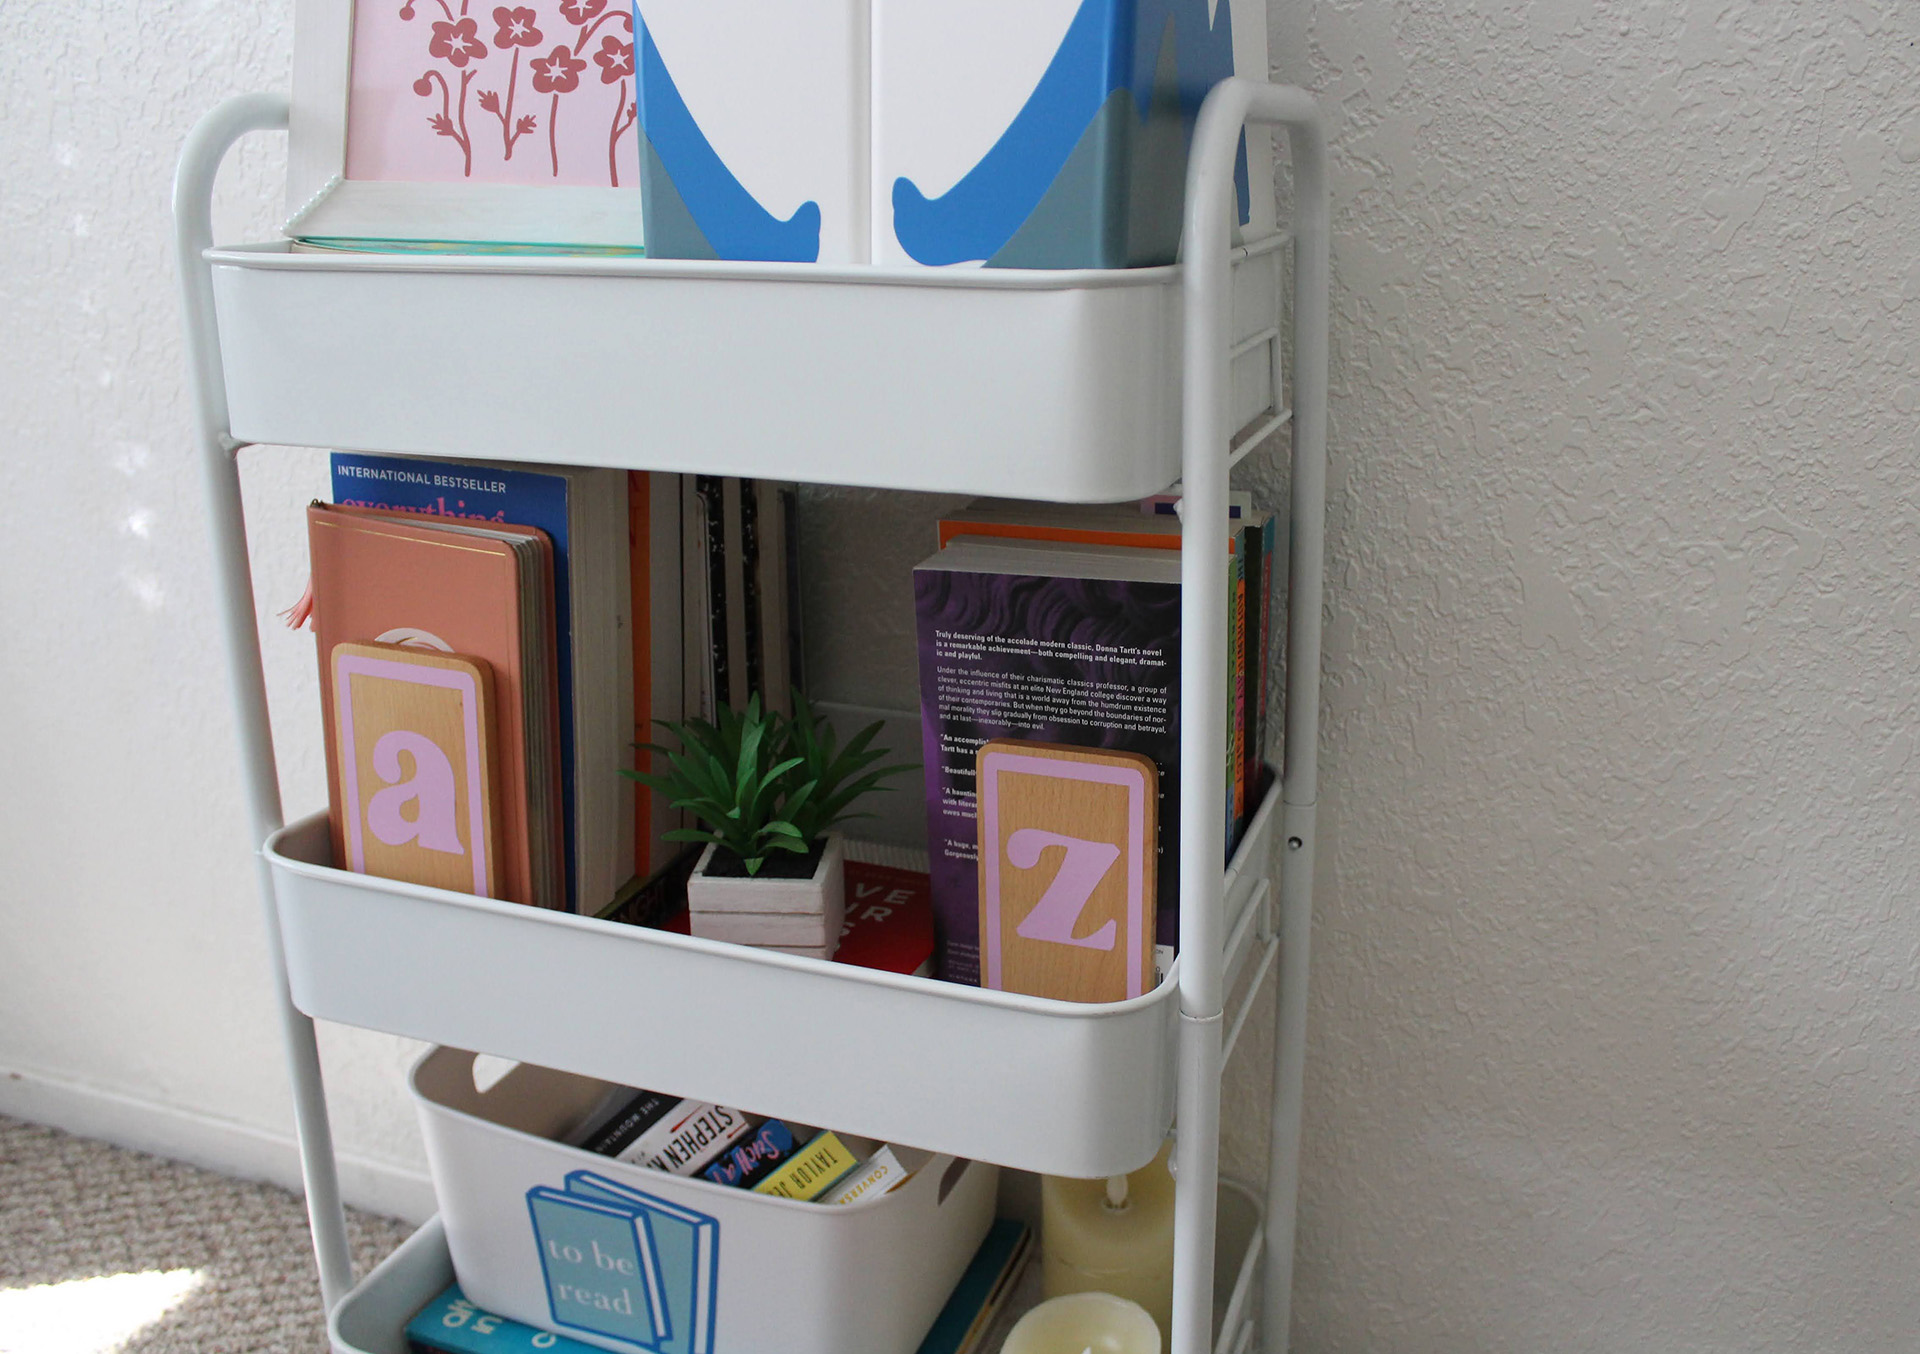 The perfect custom bookshelf – Cricut